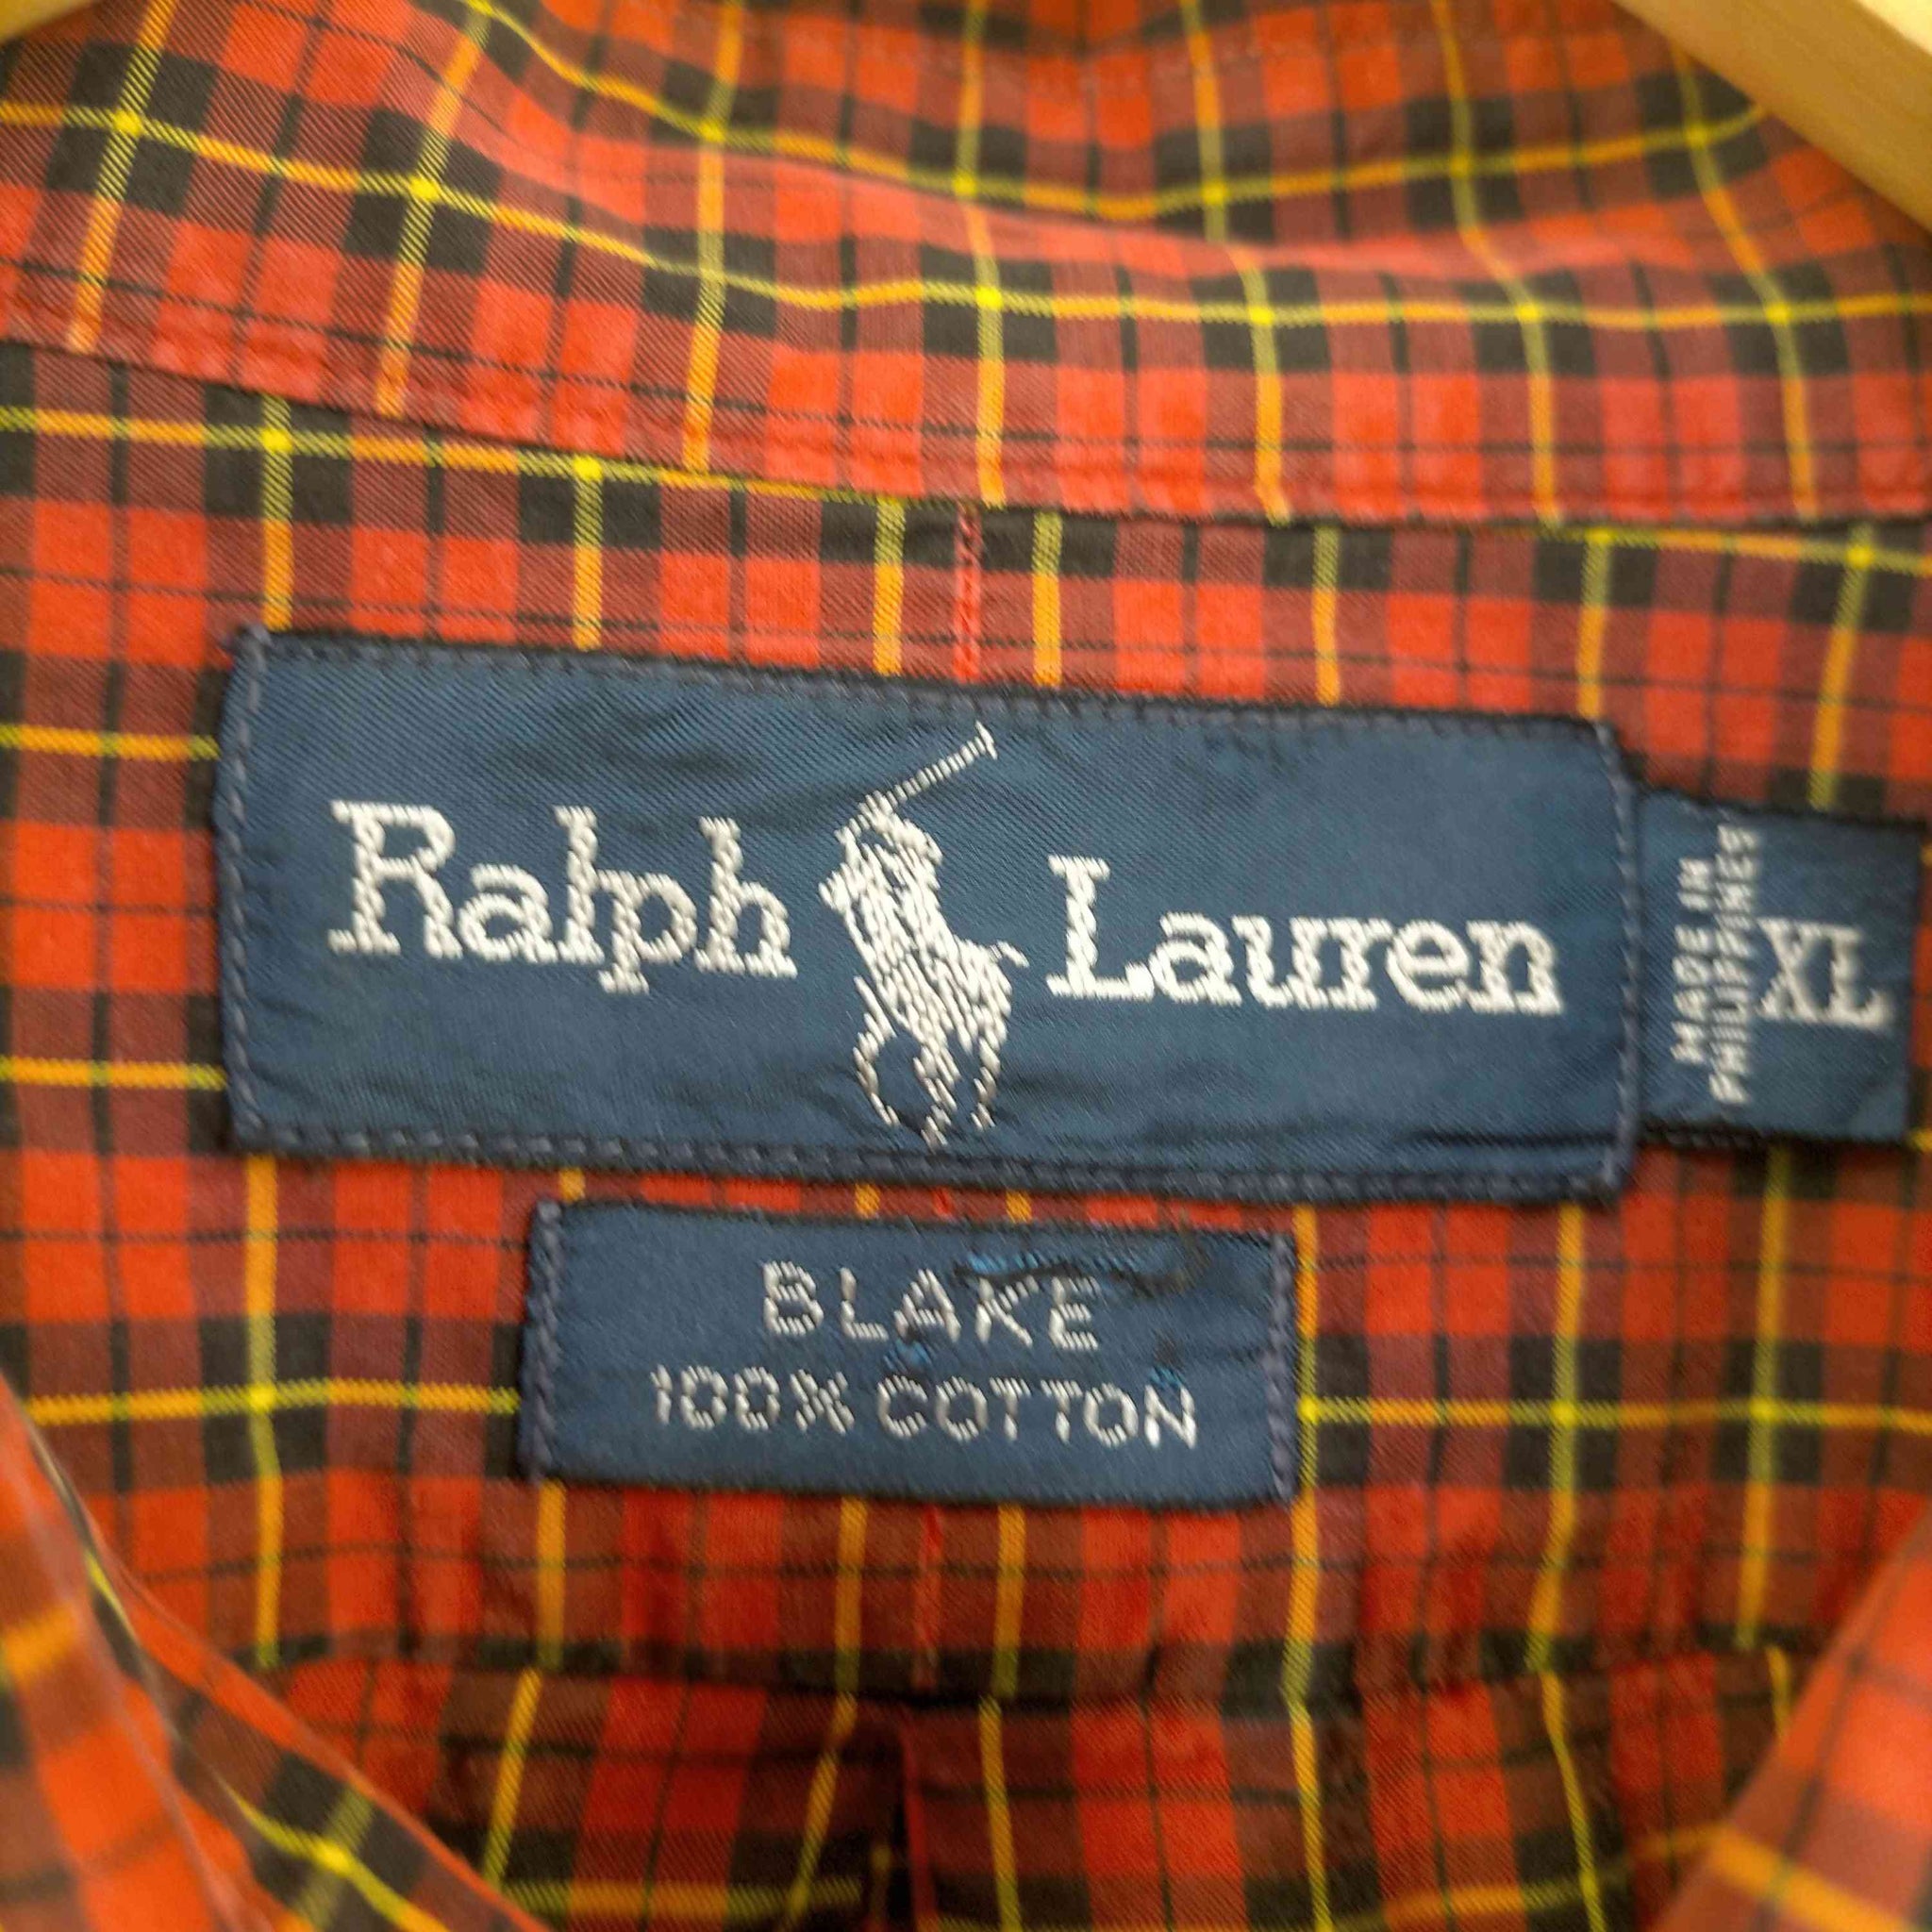 RALPH LAUREN(ラルフローレン)BLAKE ポニー刺繍 チェック BDシャツ